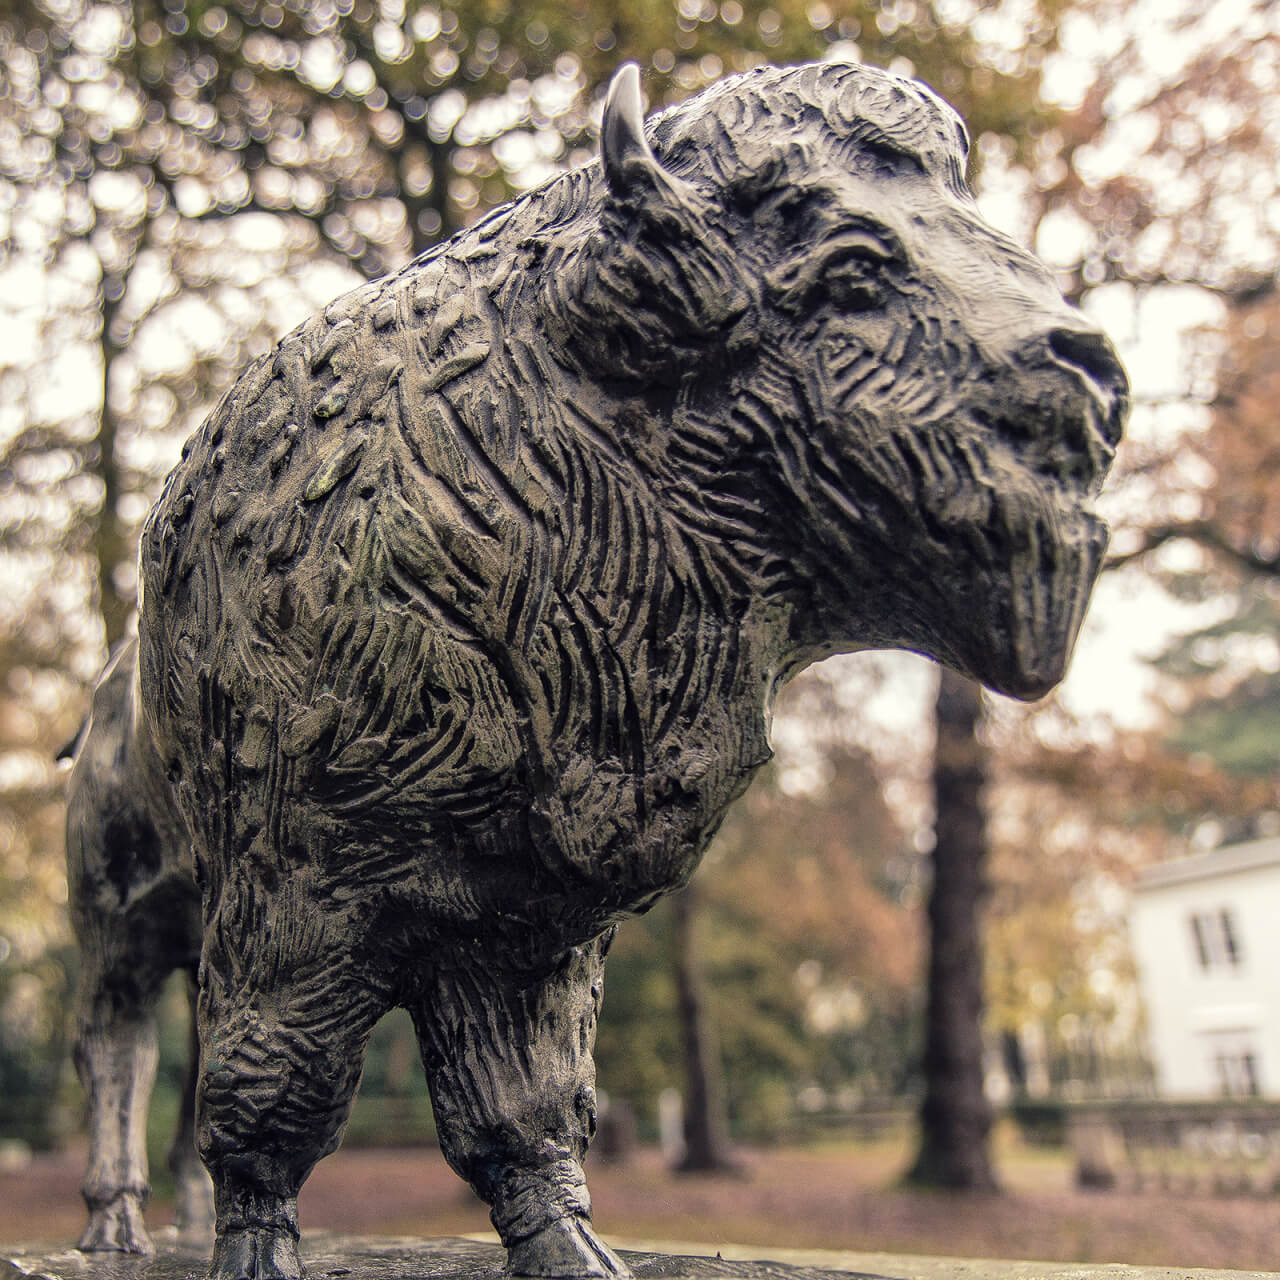 Image of a buffalo